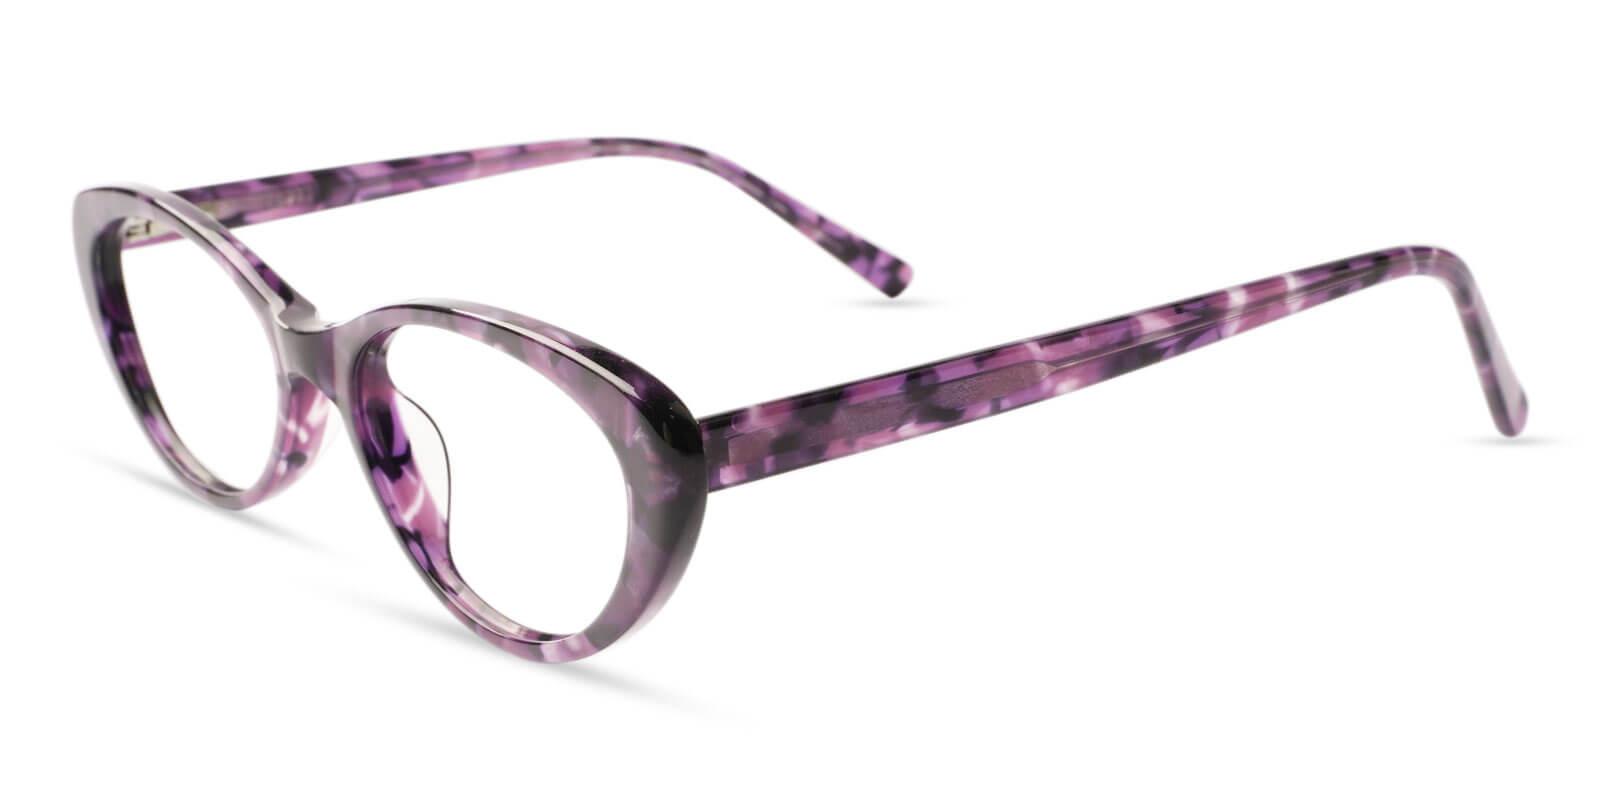 Elena Purple Acetate Eyeglasses , UniversalBridgeFit Frames from ABBE Glasses